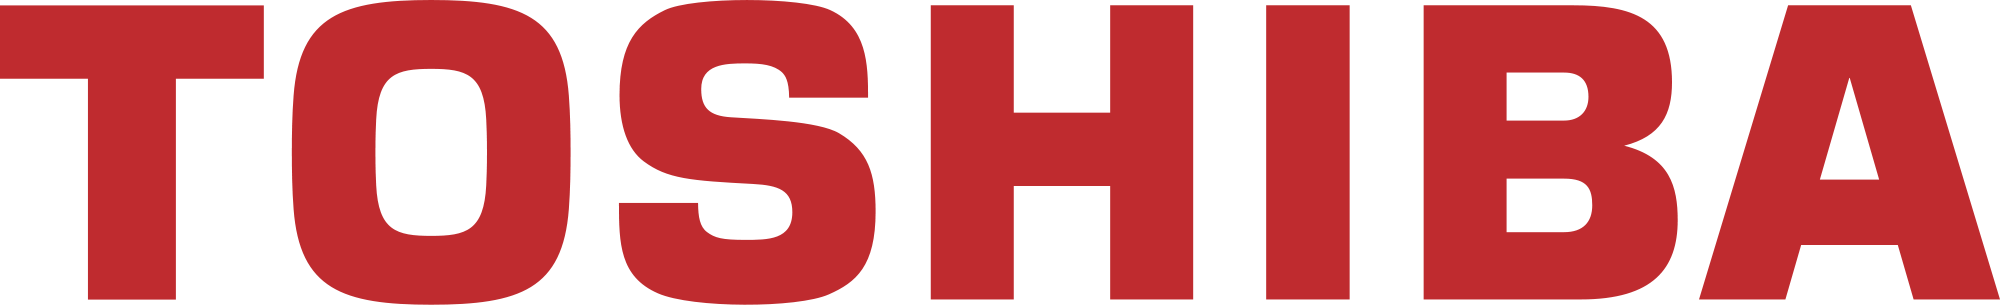 2000px-Toshiba_logo.svg.png